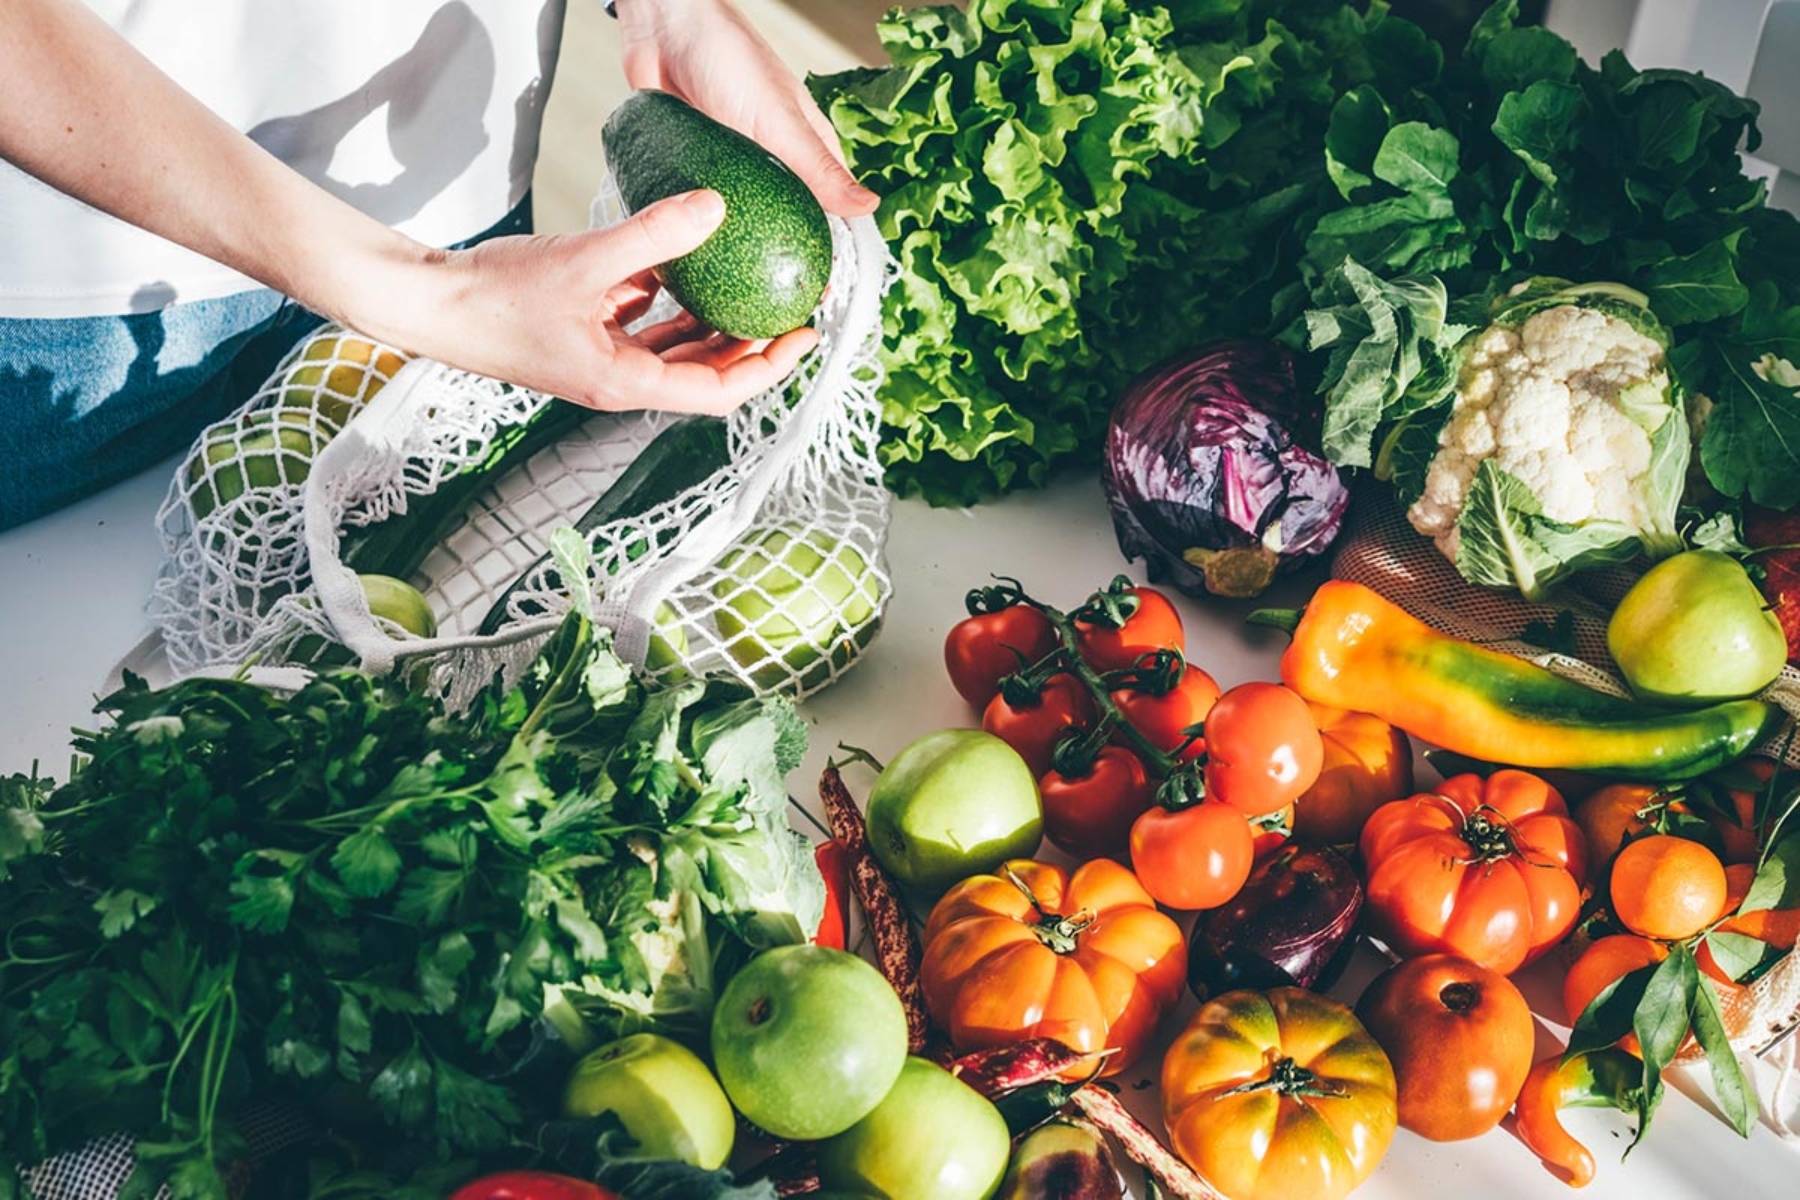 Veggies: Τα 5 πιο υγιεινά λαχανικά που πρέπει να είναι μέρος της διατροφής σας